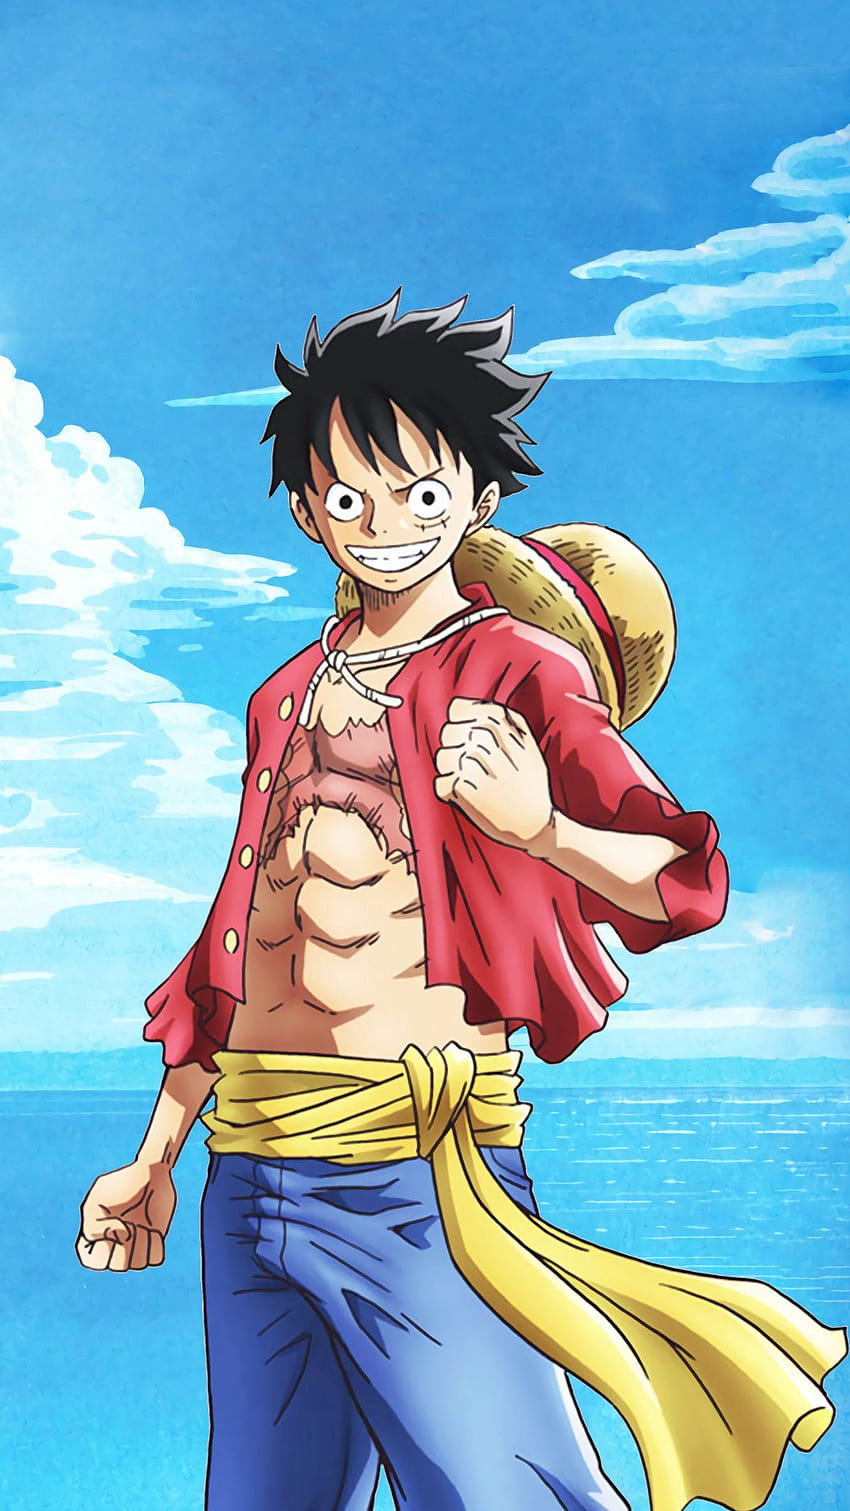 Jual Hasil Sketsa Anime Luffy One Piece | Lazada Indonesia-demhanvico.com.vn